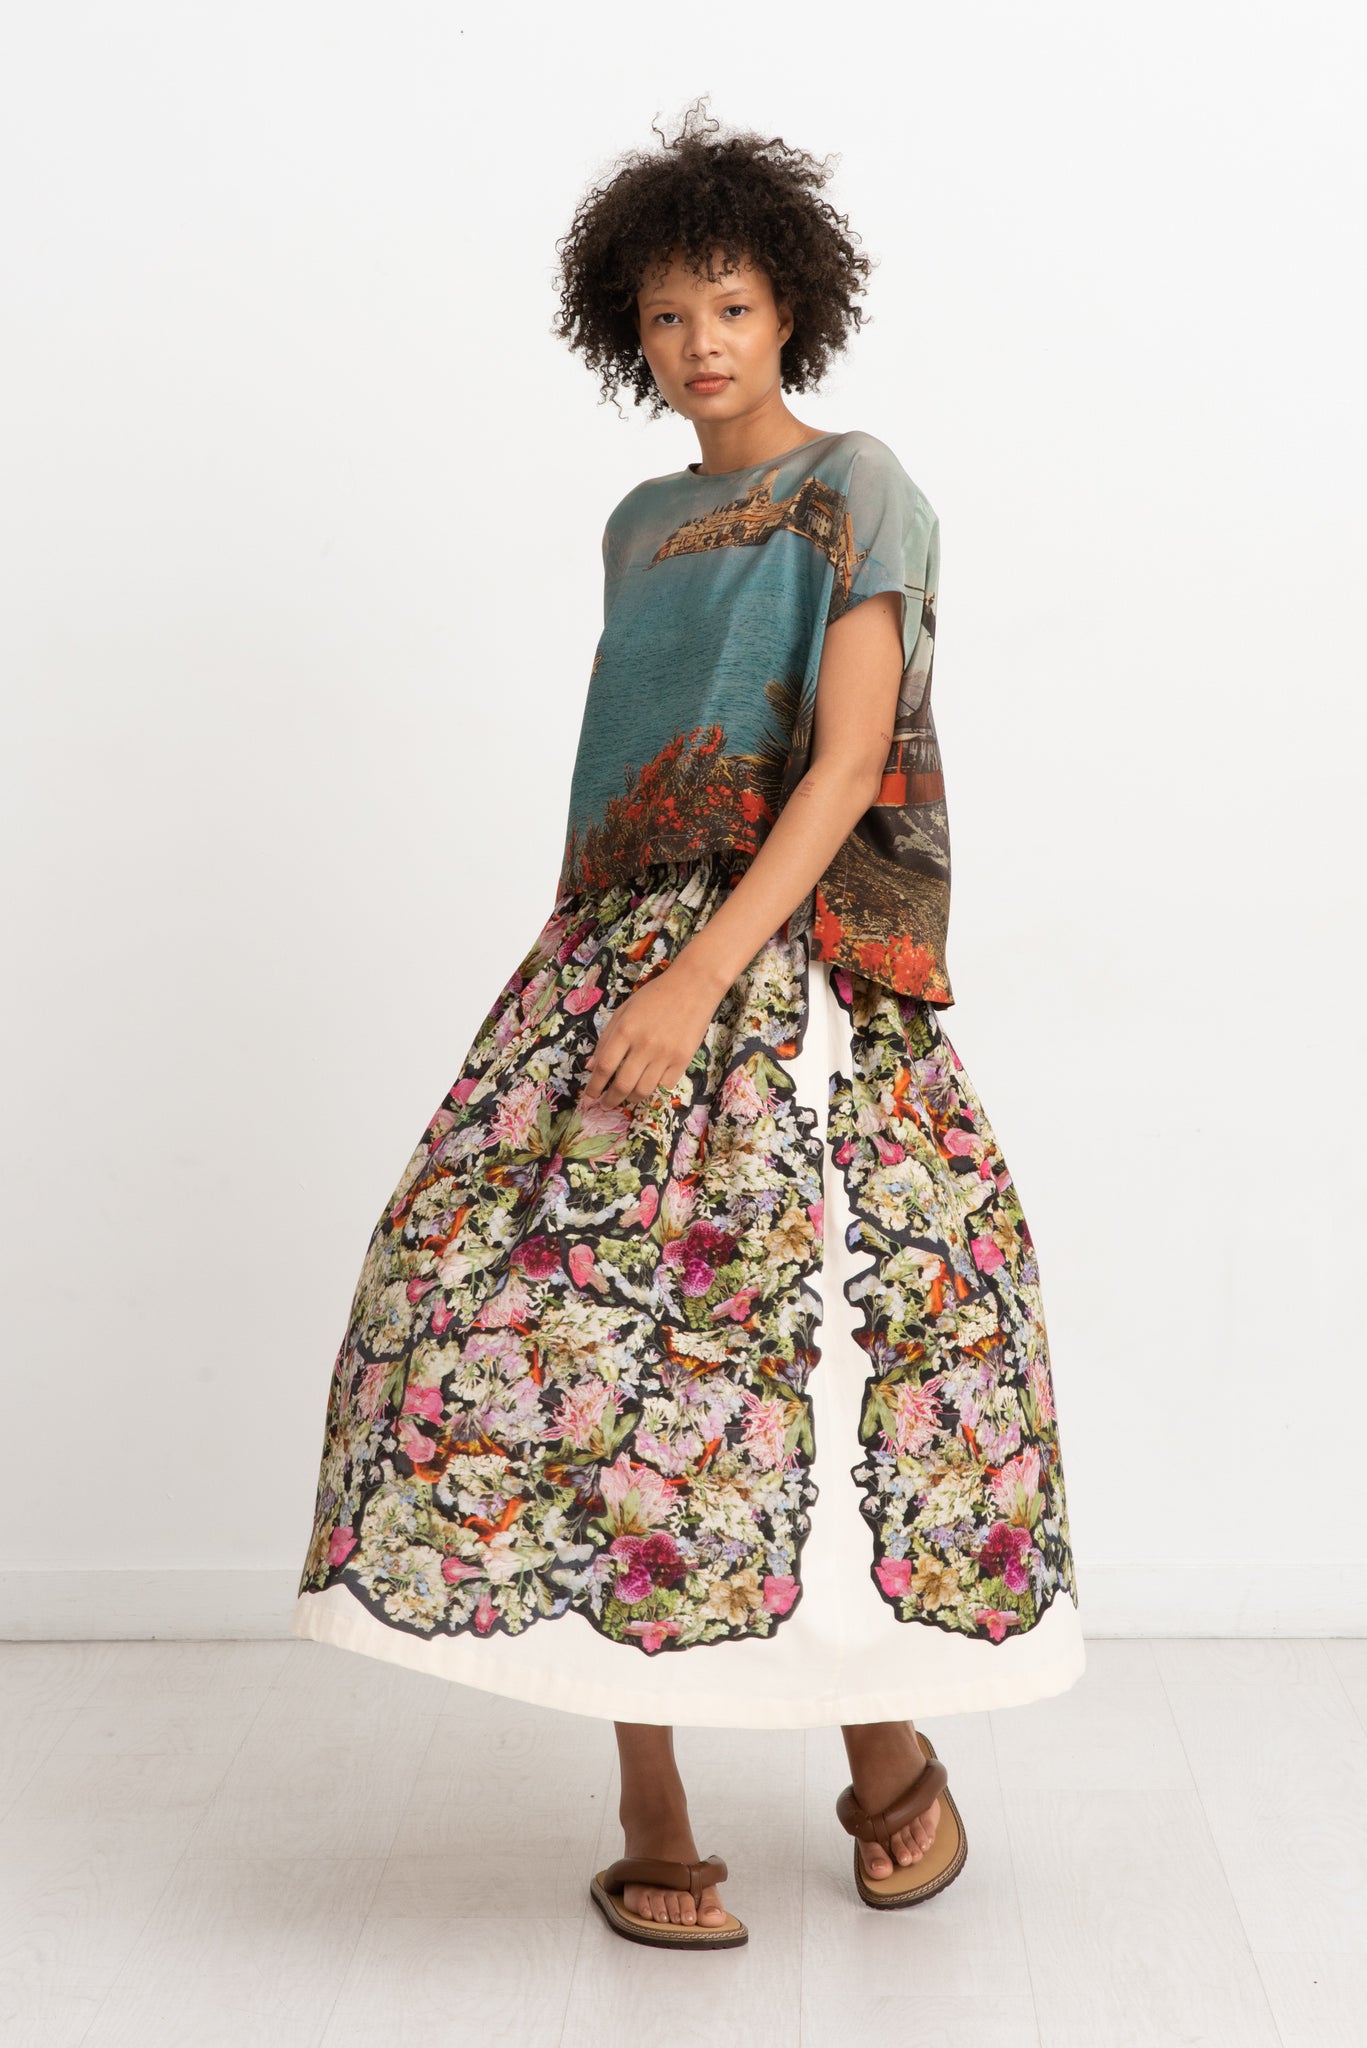 ANNTIAN - Wide Skirt, Panel Print K - Pressed Flowers